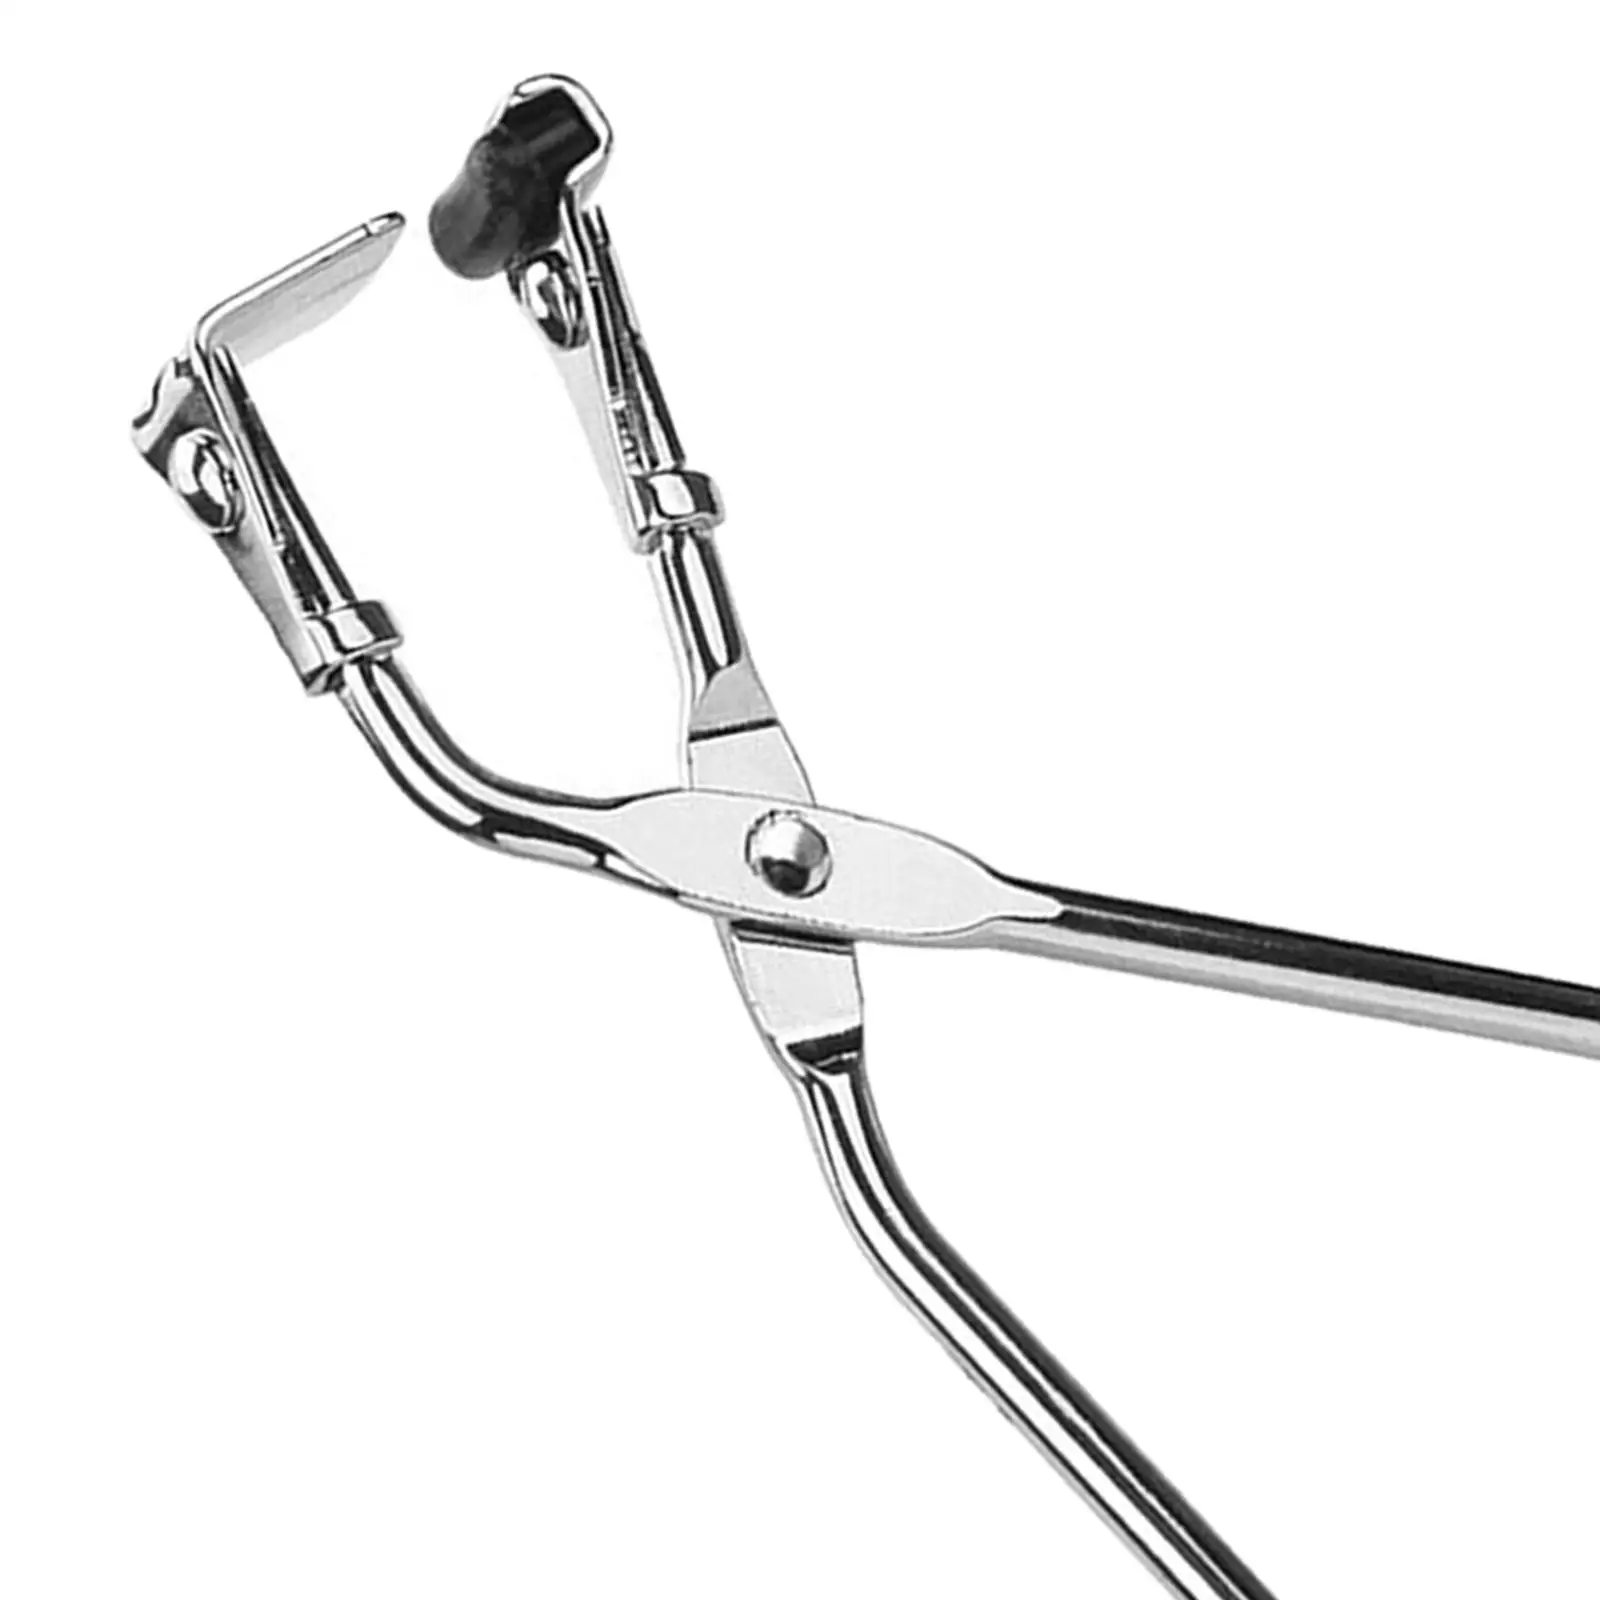 Professional Mini Eyelash Curler Precision Control Easy to Use Fits All Eyelash Shapes Lifts & Defines Lash Curler